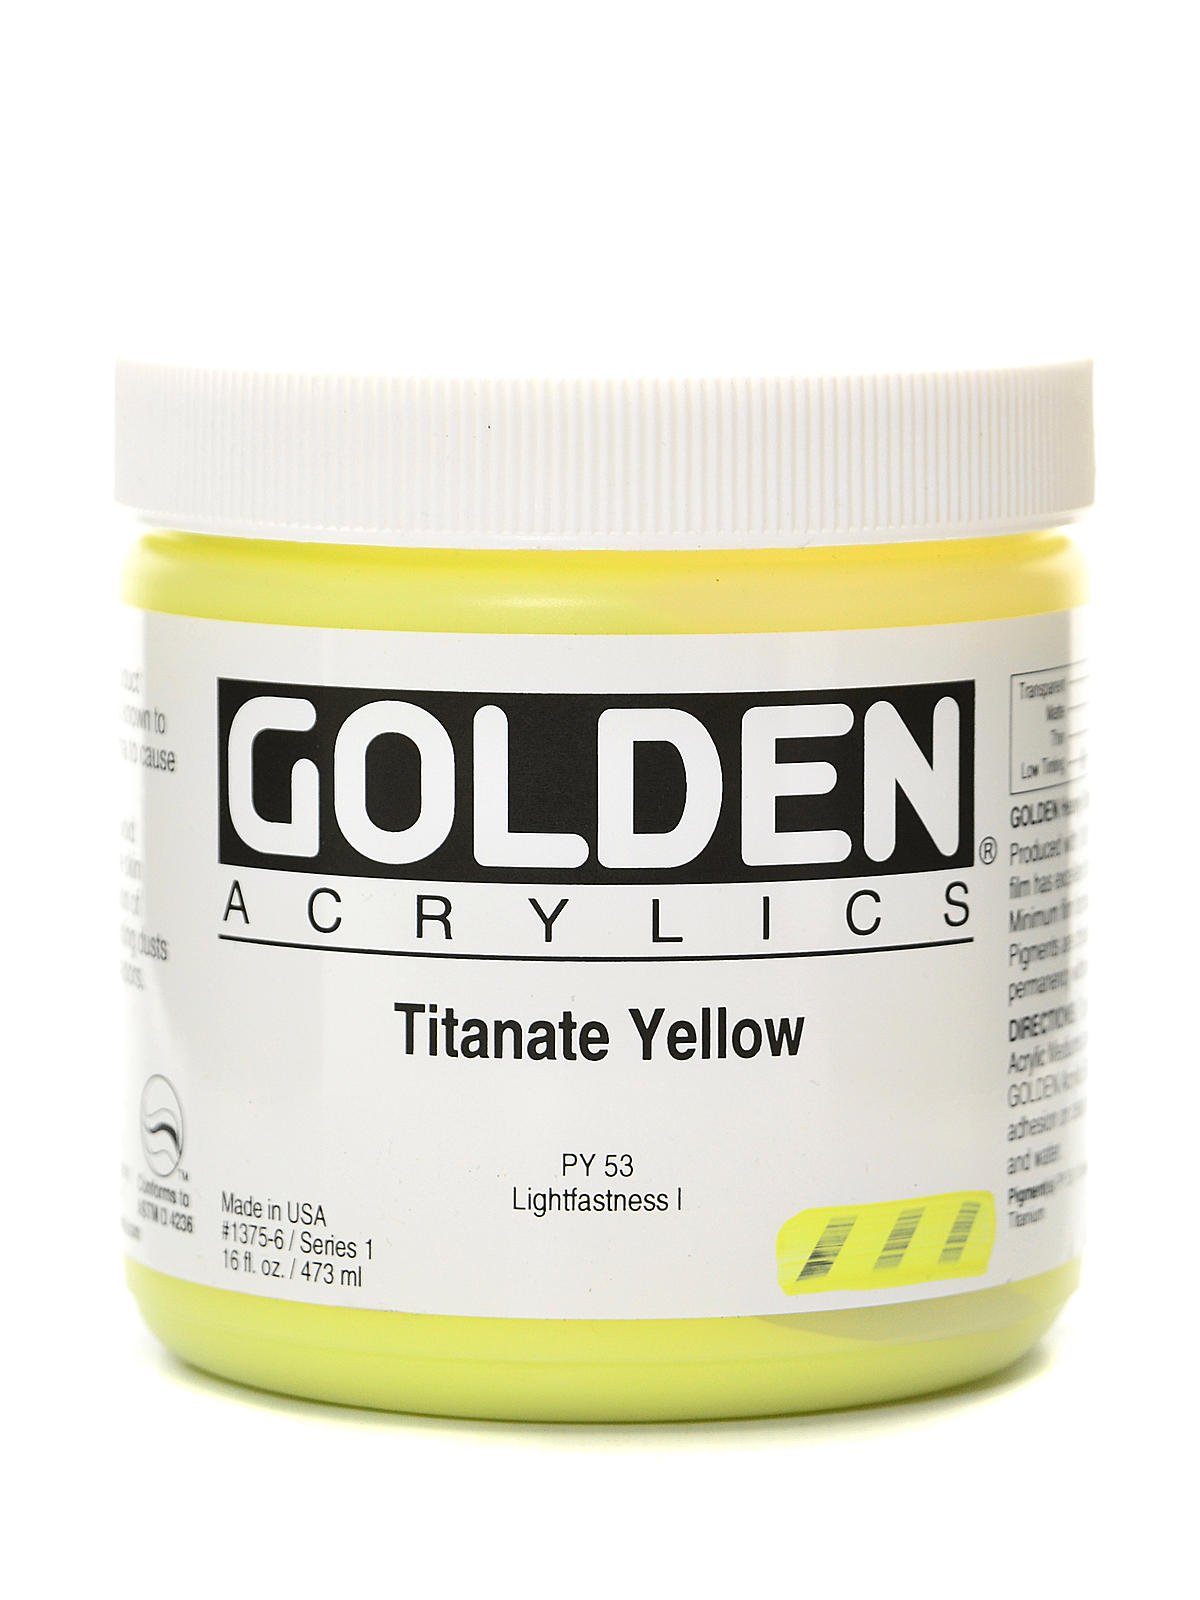 Titanate Yellow